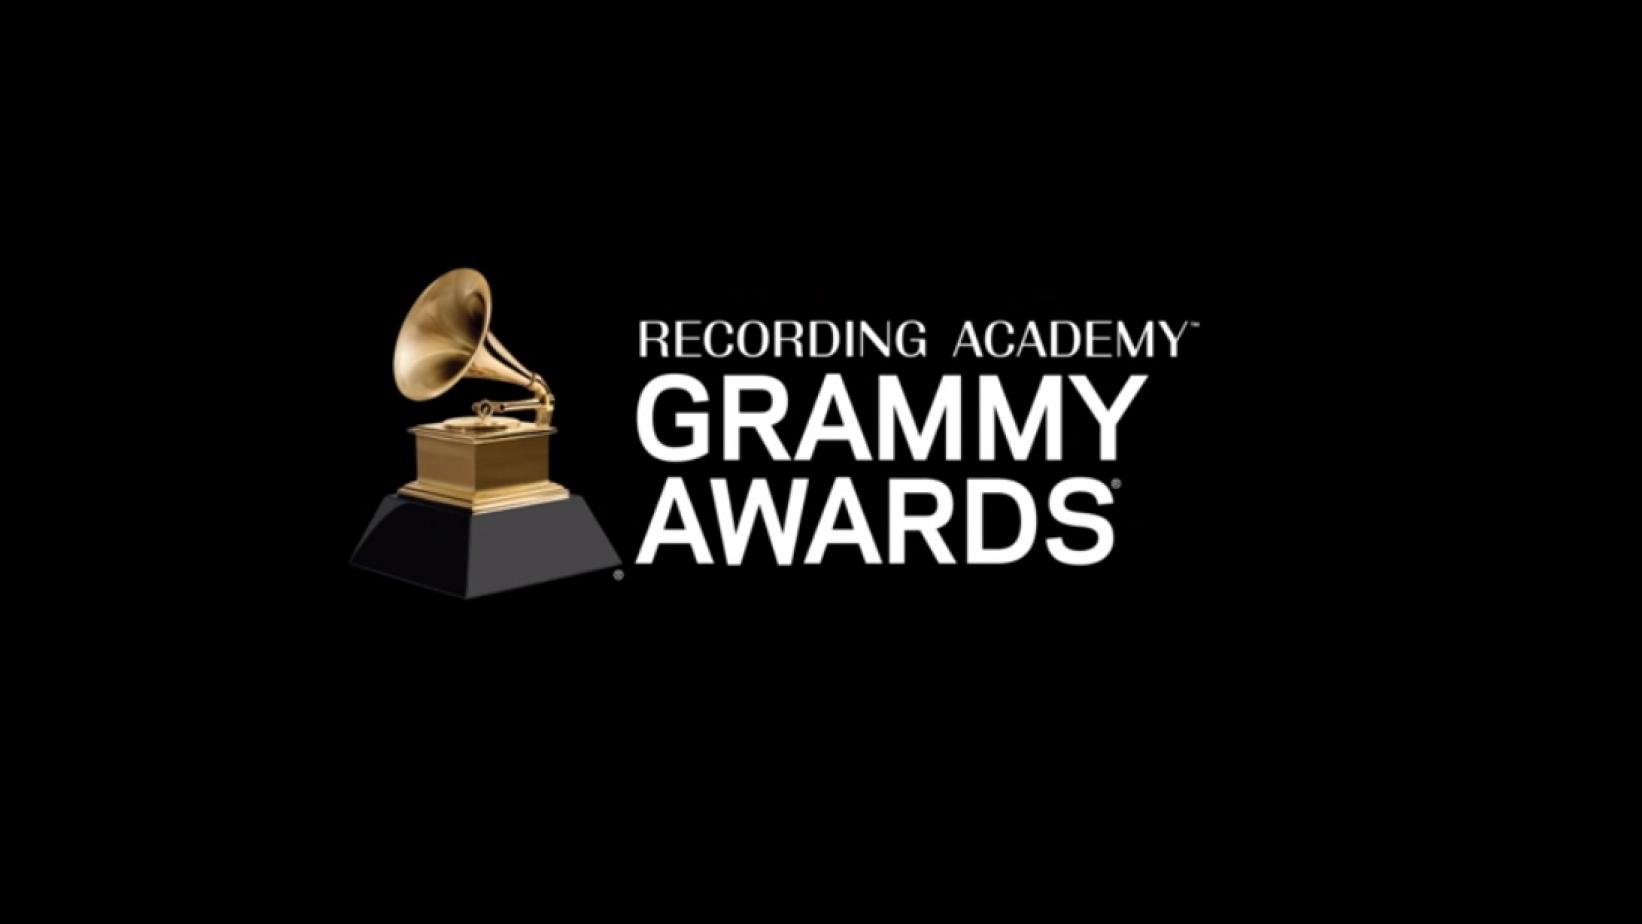 65th Grammy Awards